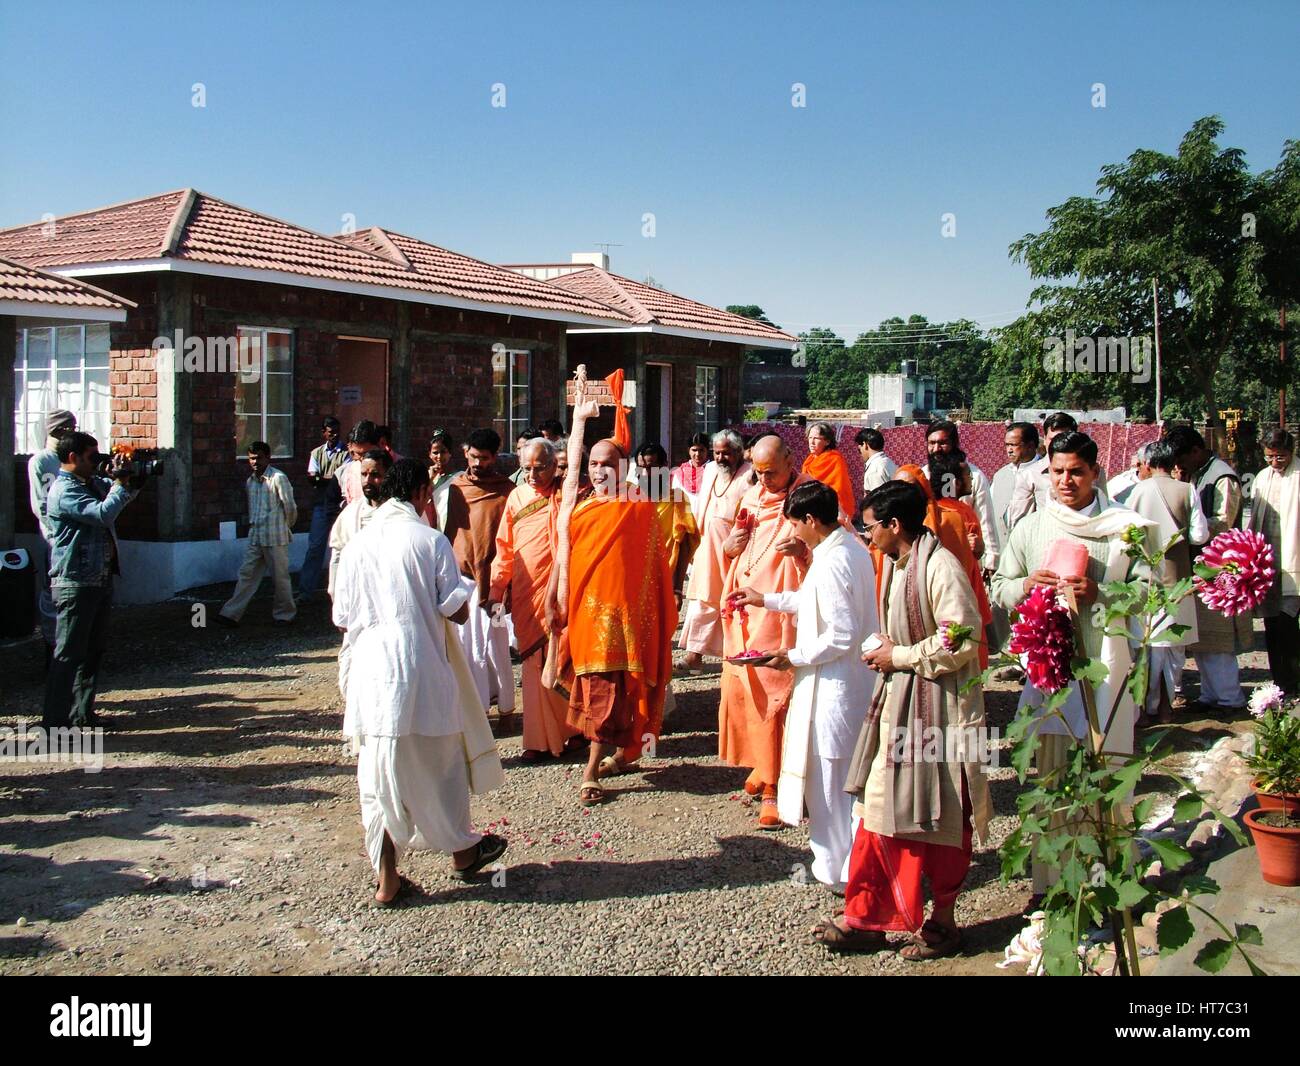 Swami Veda Bharati, Inaguration Function at AIMSIN, Swami Rama Sadhaka Grama Dhyana Gurukulam / Ashram, Rishikesh, India (Copyright © Saji Maramon) Stock Photo